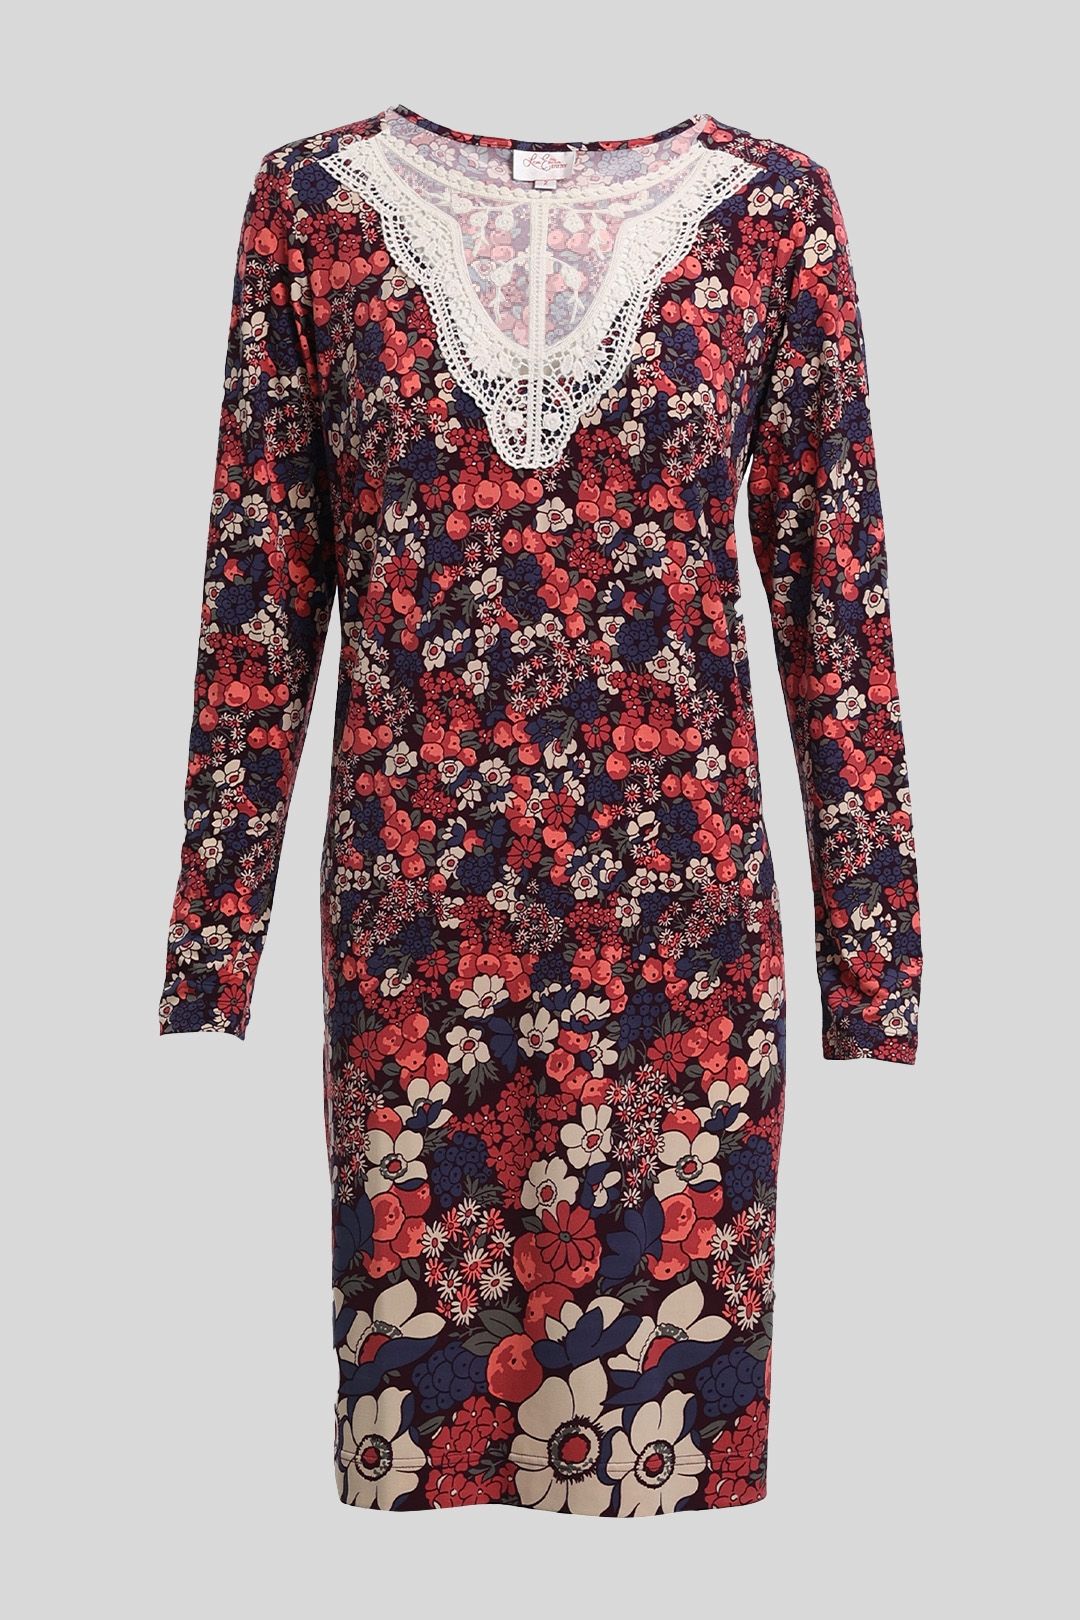 Leona Edmiston - Floral Shift Dress with Lace Bodice